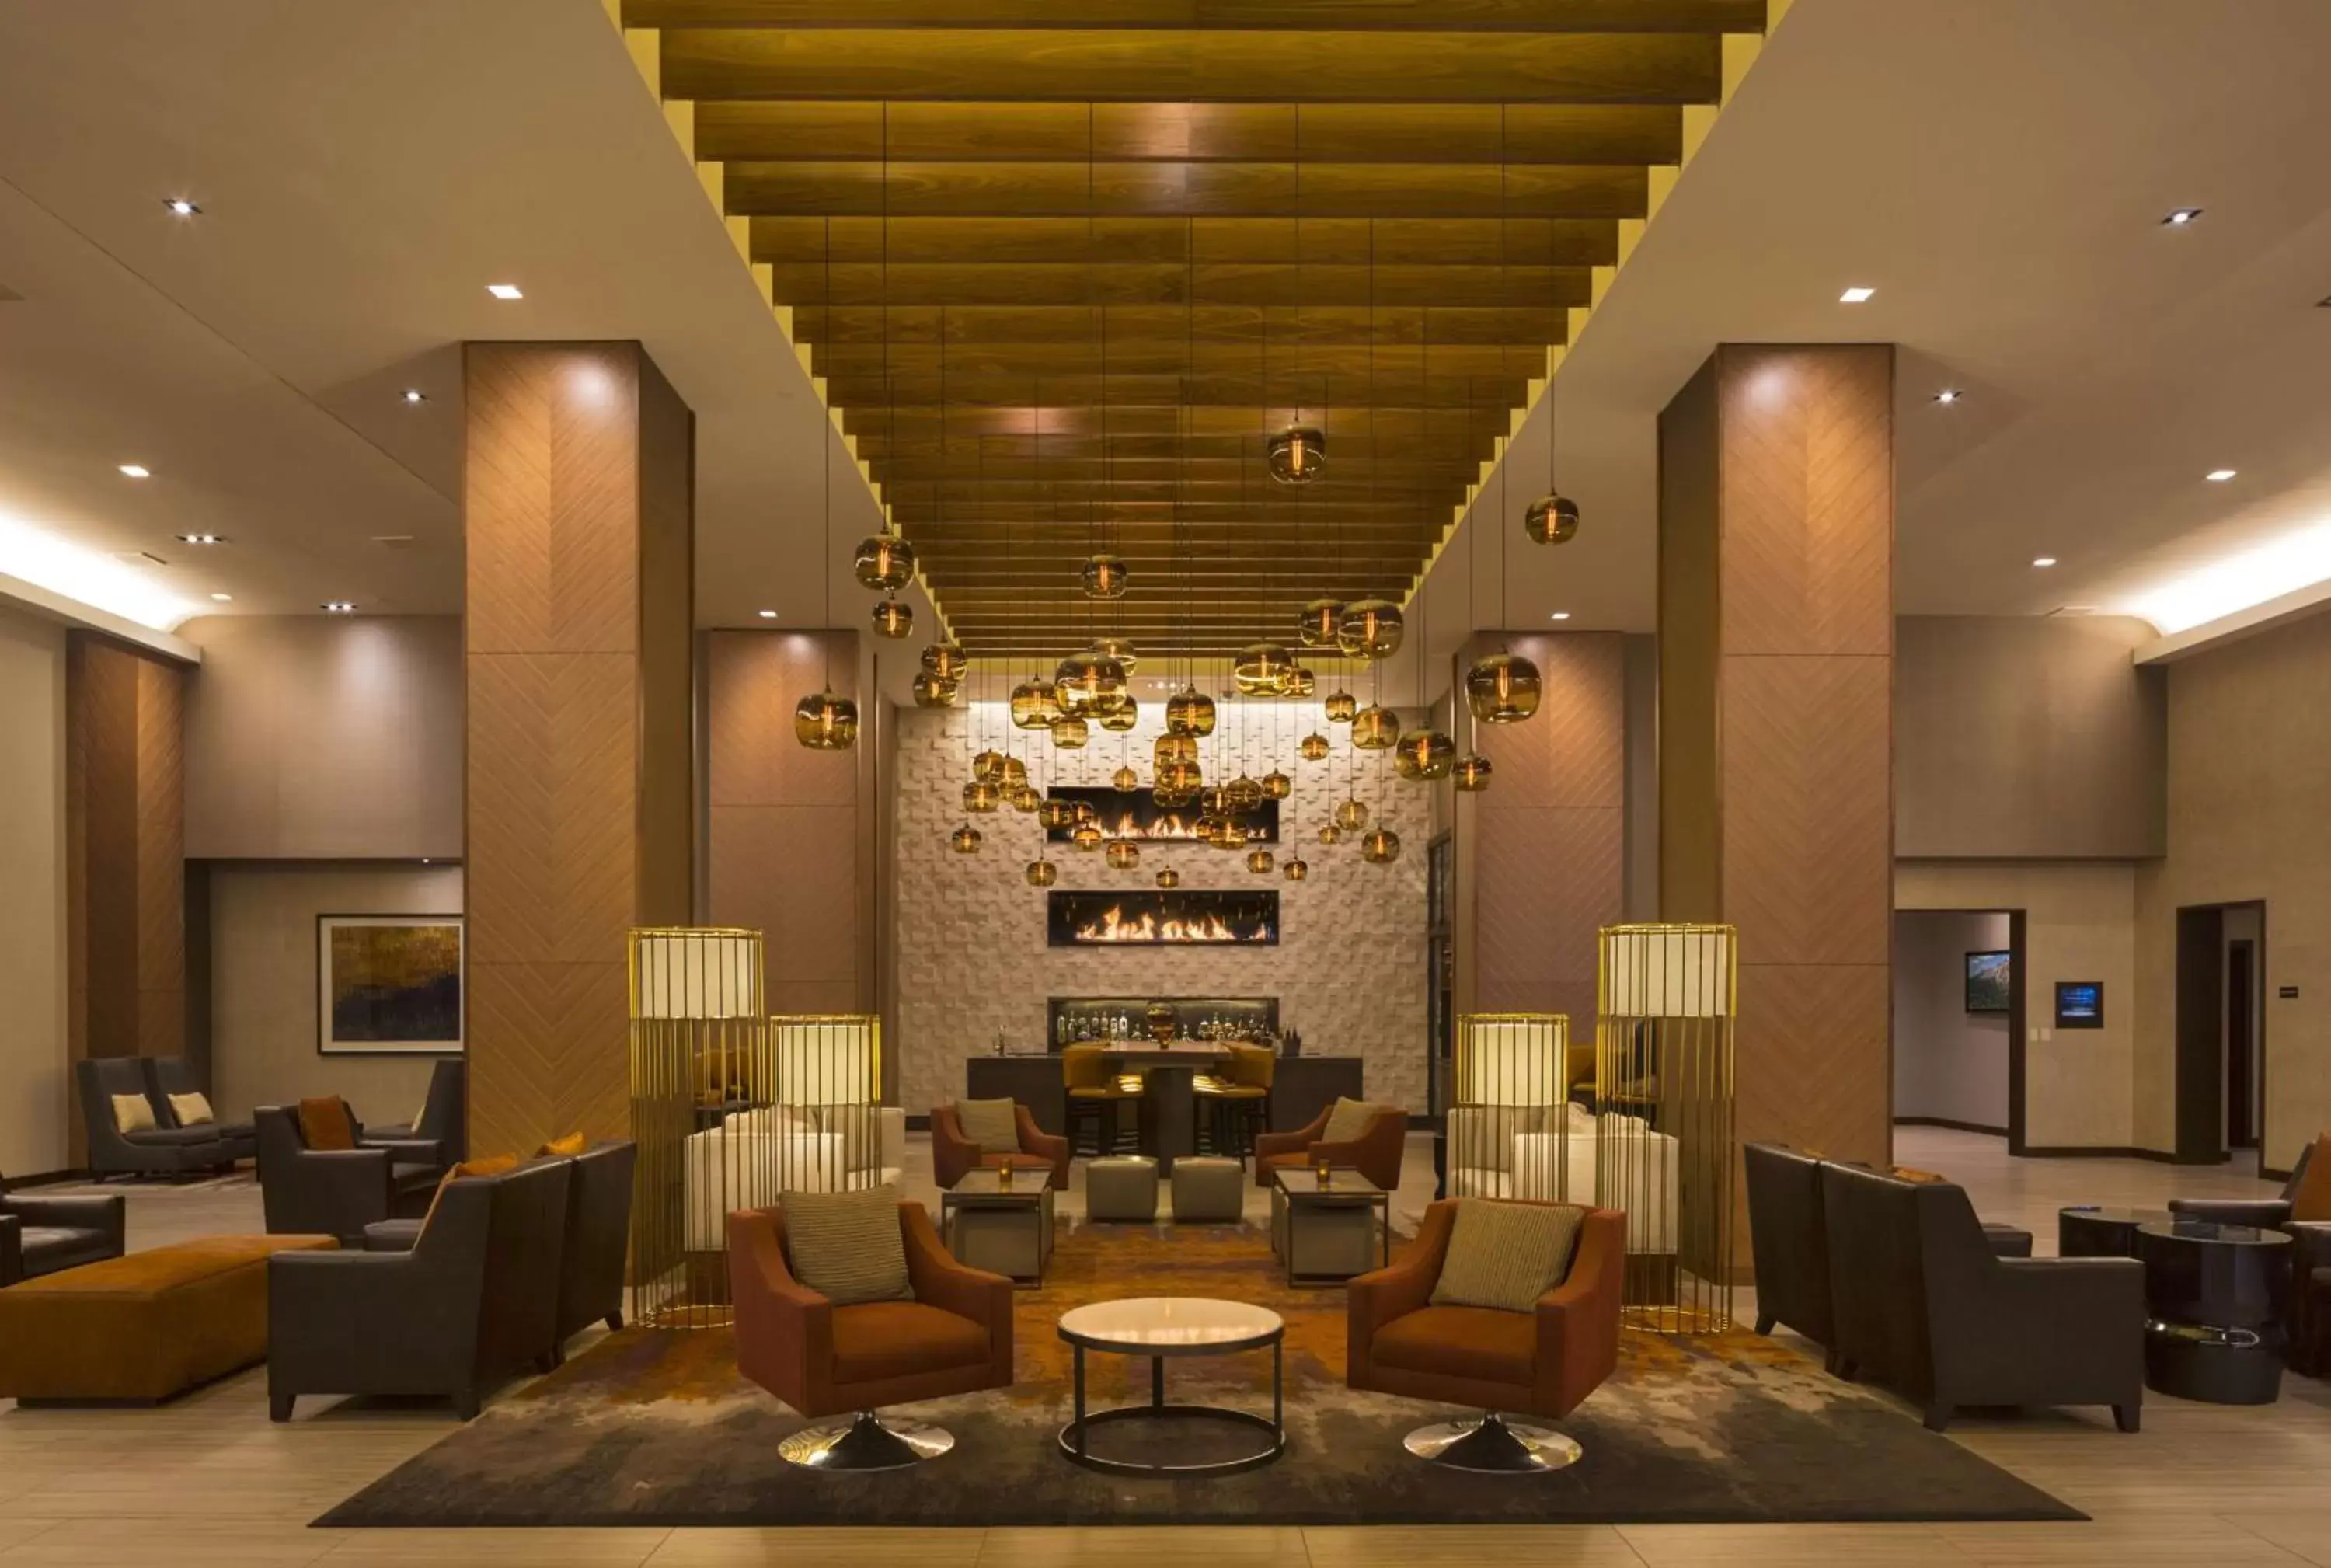 Lobby or reception, Restaurant/Places to Eat in Grand Hyatt Denver